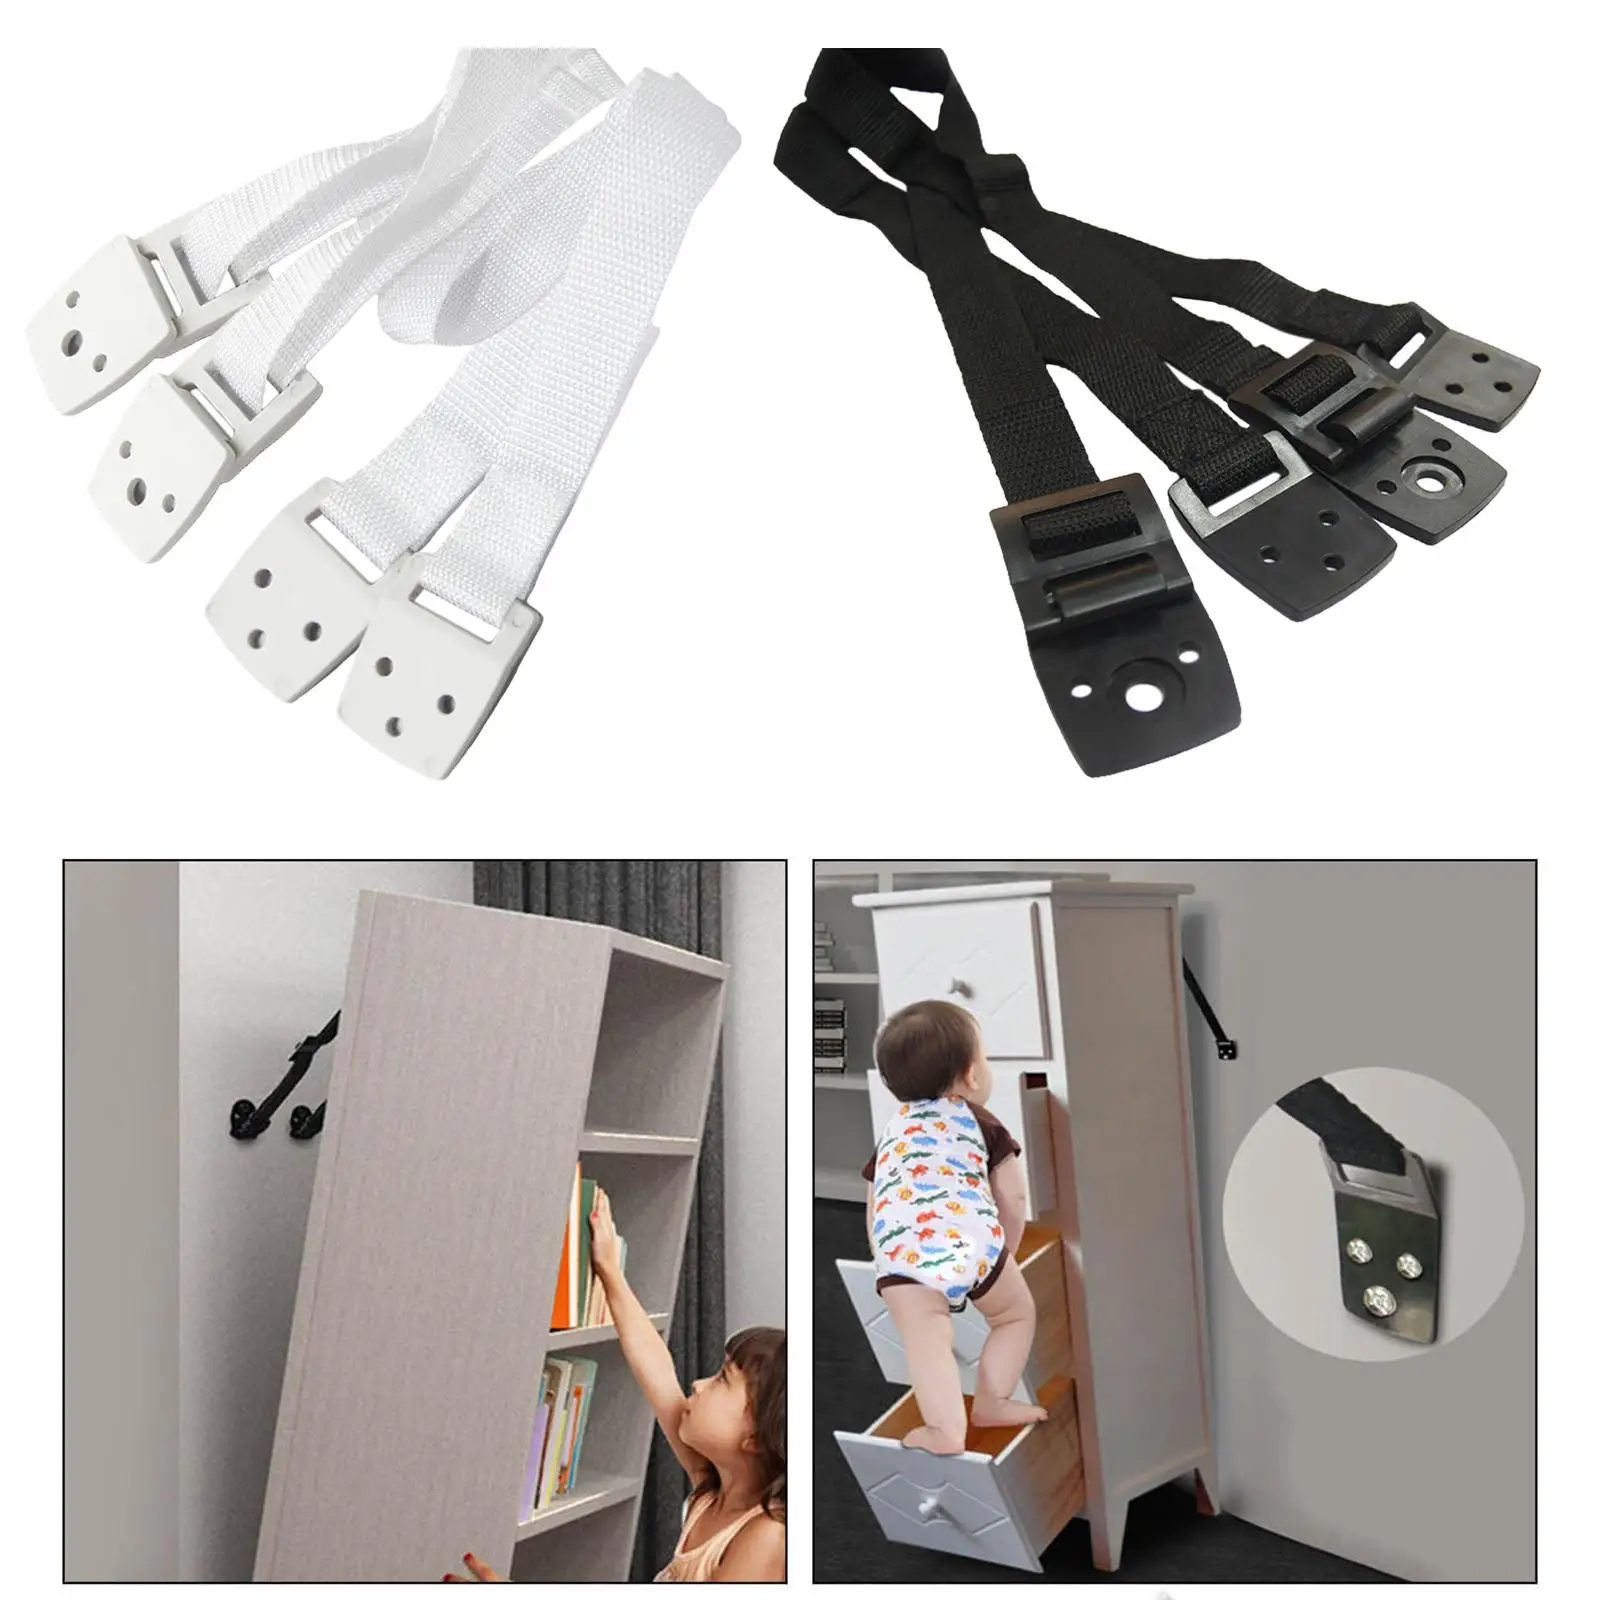 TV Anti Tip Straps  Heavy Duty Adjustable Secure Stand Harness Holder for Dresser TV Stands Shelves Flat Screen Child